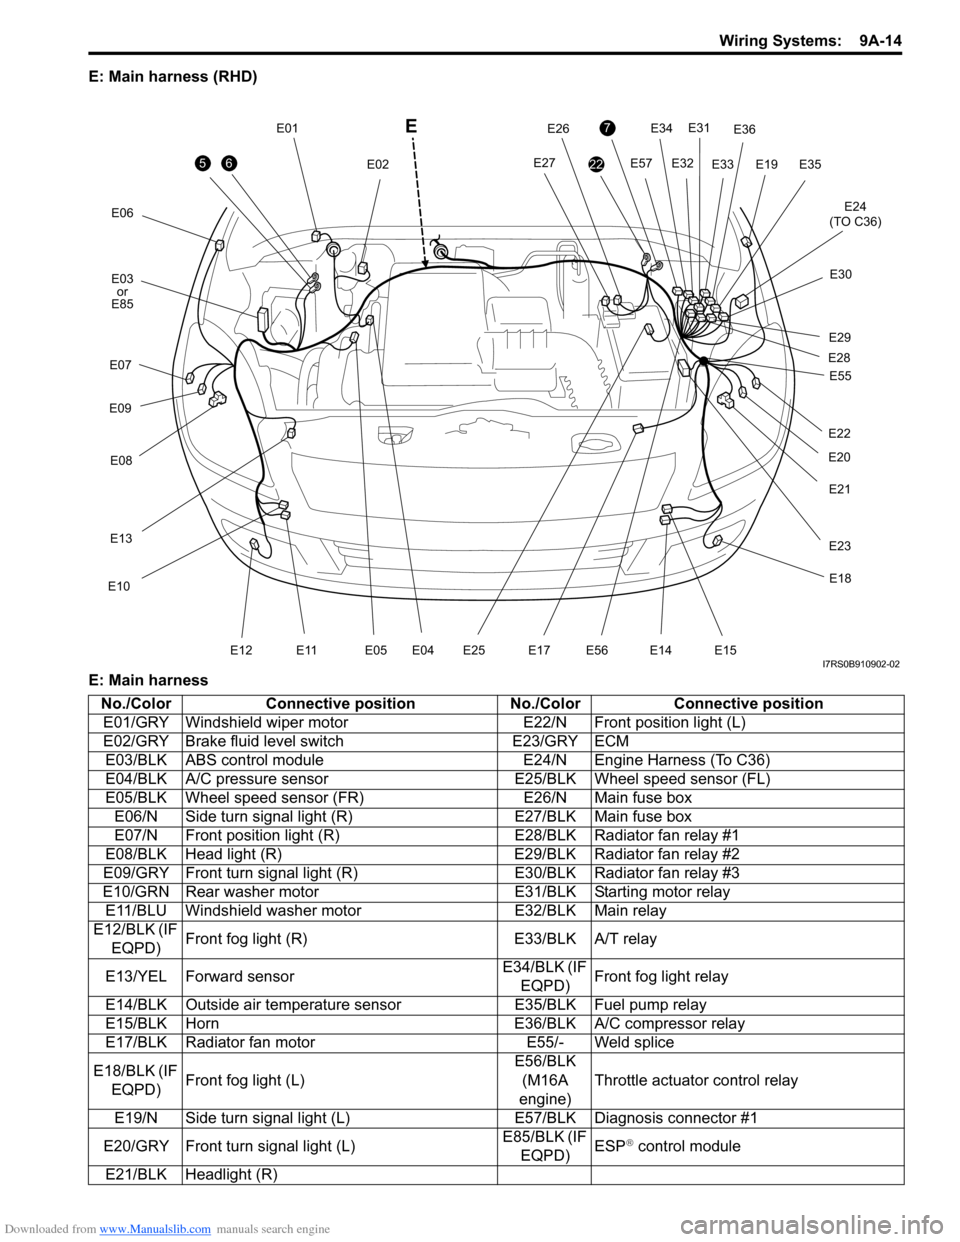 SUZUKI SWIFT 2005 2.G Service Workshop Manual Downloaded from www.Manualslib.com manuals search engine Wiring Systems:  9A-14
E: Main harness (RHD)
E: Main harness
56
E06E12
E03or
E85
E07
E09
E08
E13
E10
E11E05 E04
E01 E02
E19
7
22
E34E31
E32
E57